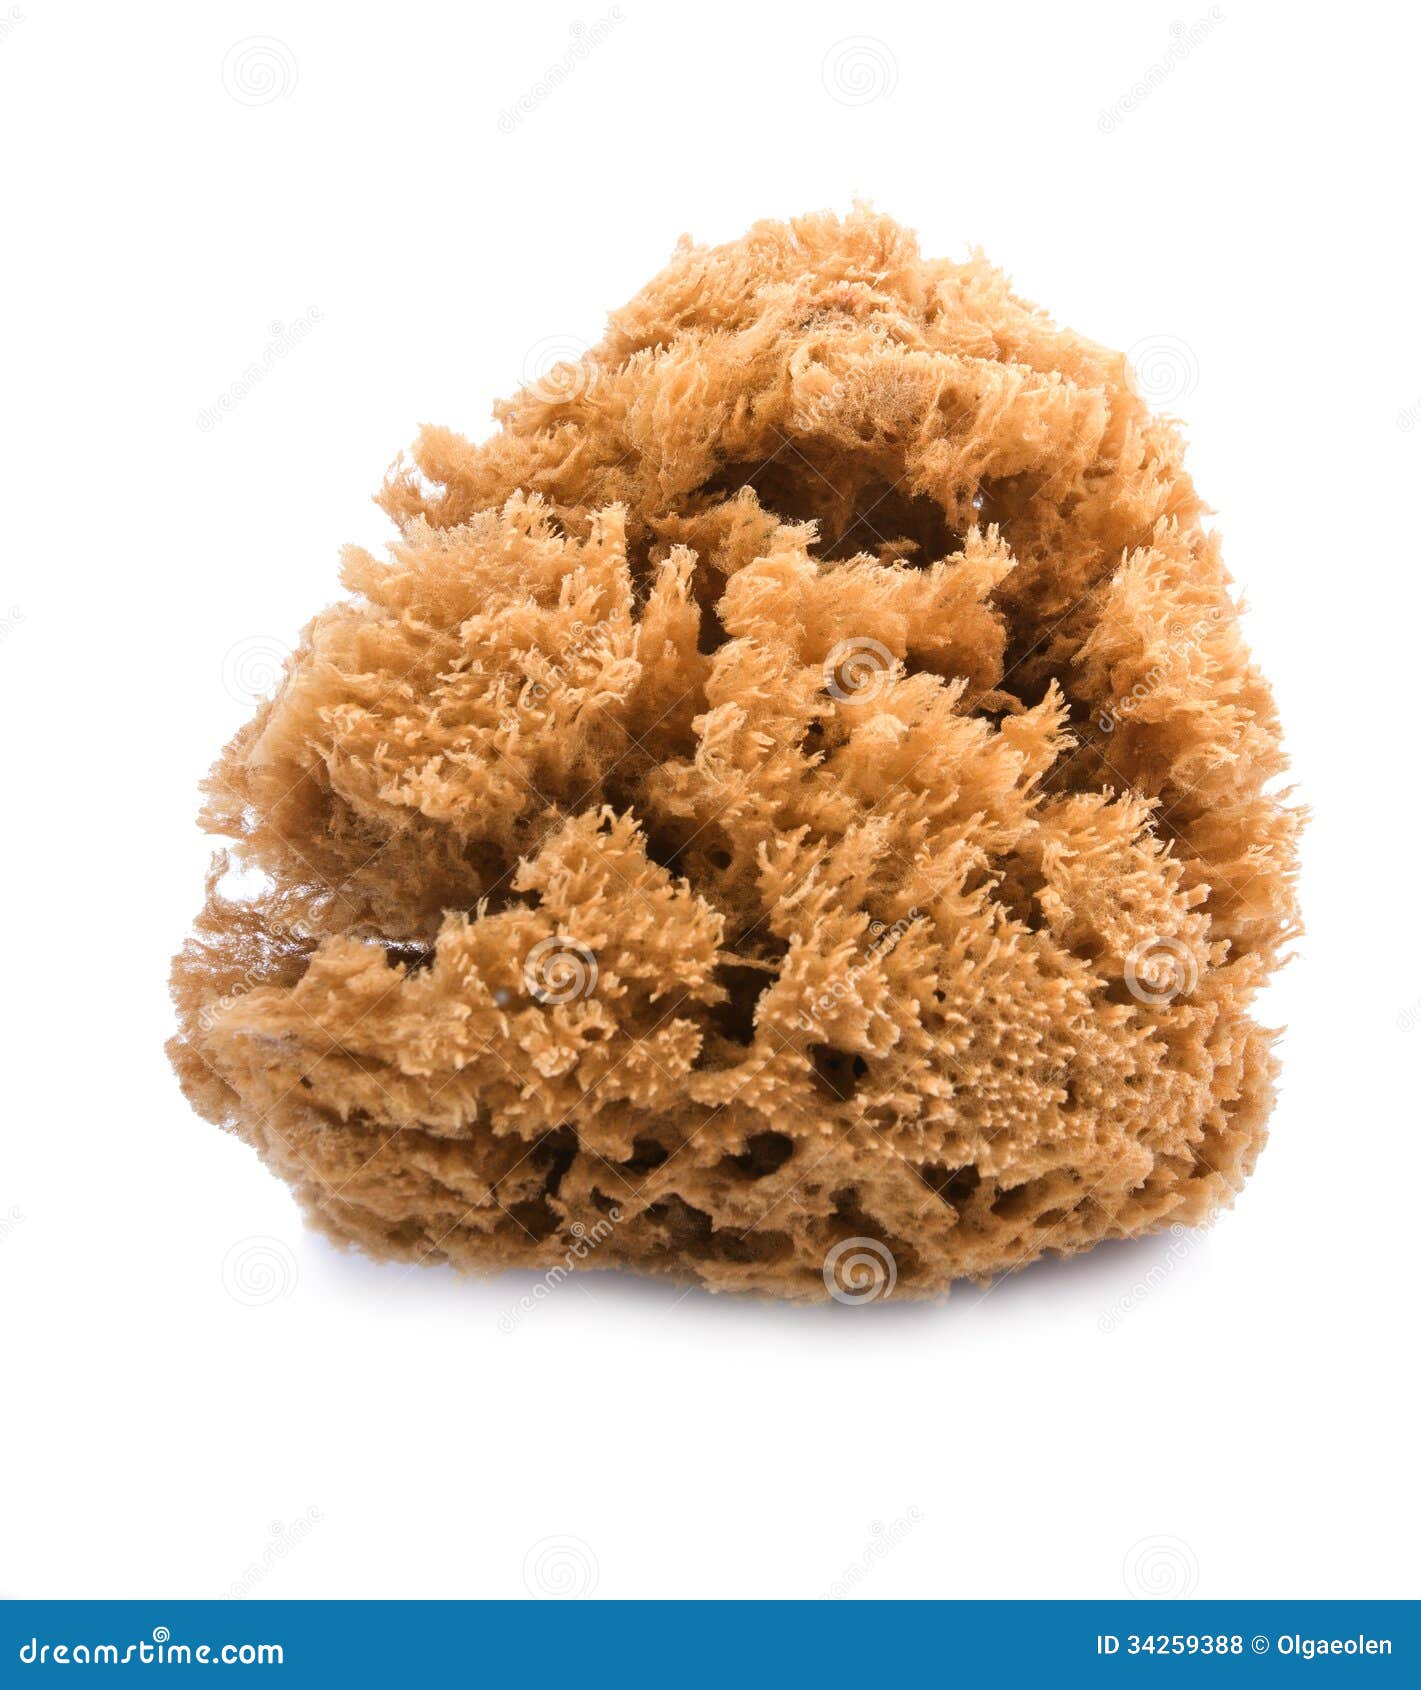 Brown natural sponge stock photo. Image of hygien, sponge - 34259388